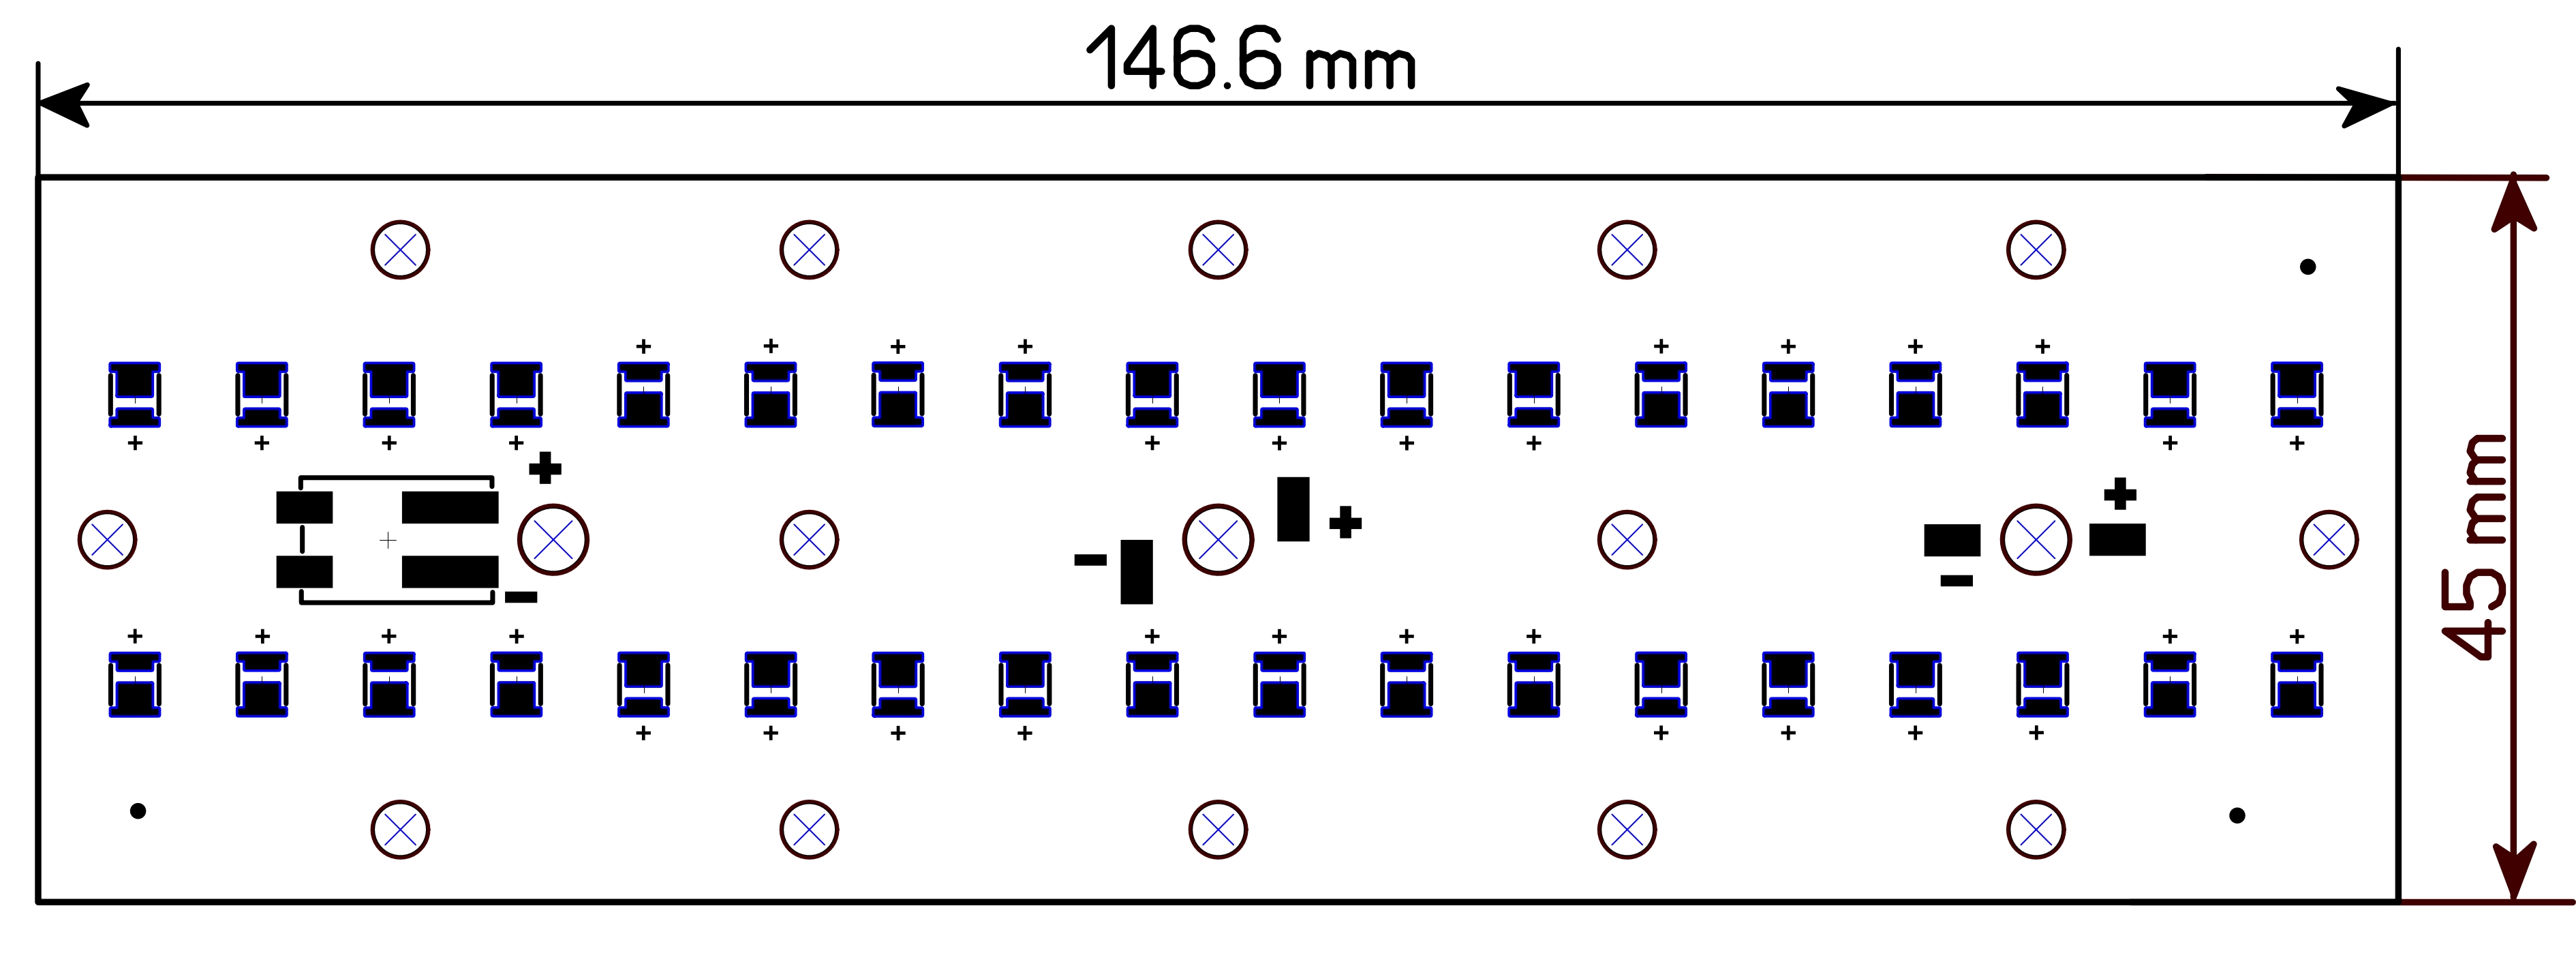 ALC146.45.36-0-LM302D-R0SF-10 05 Додэка-Свет